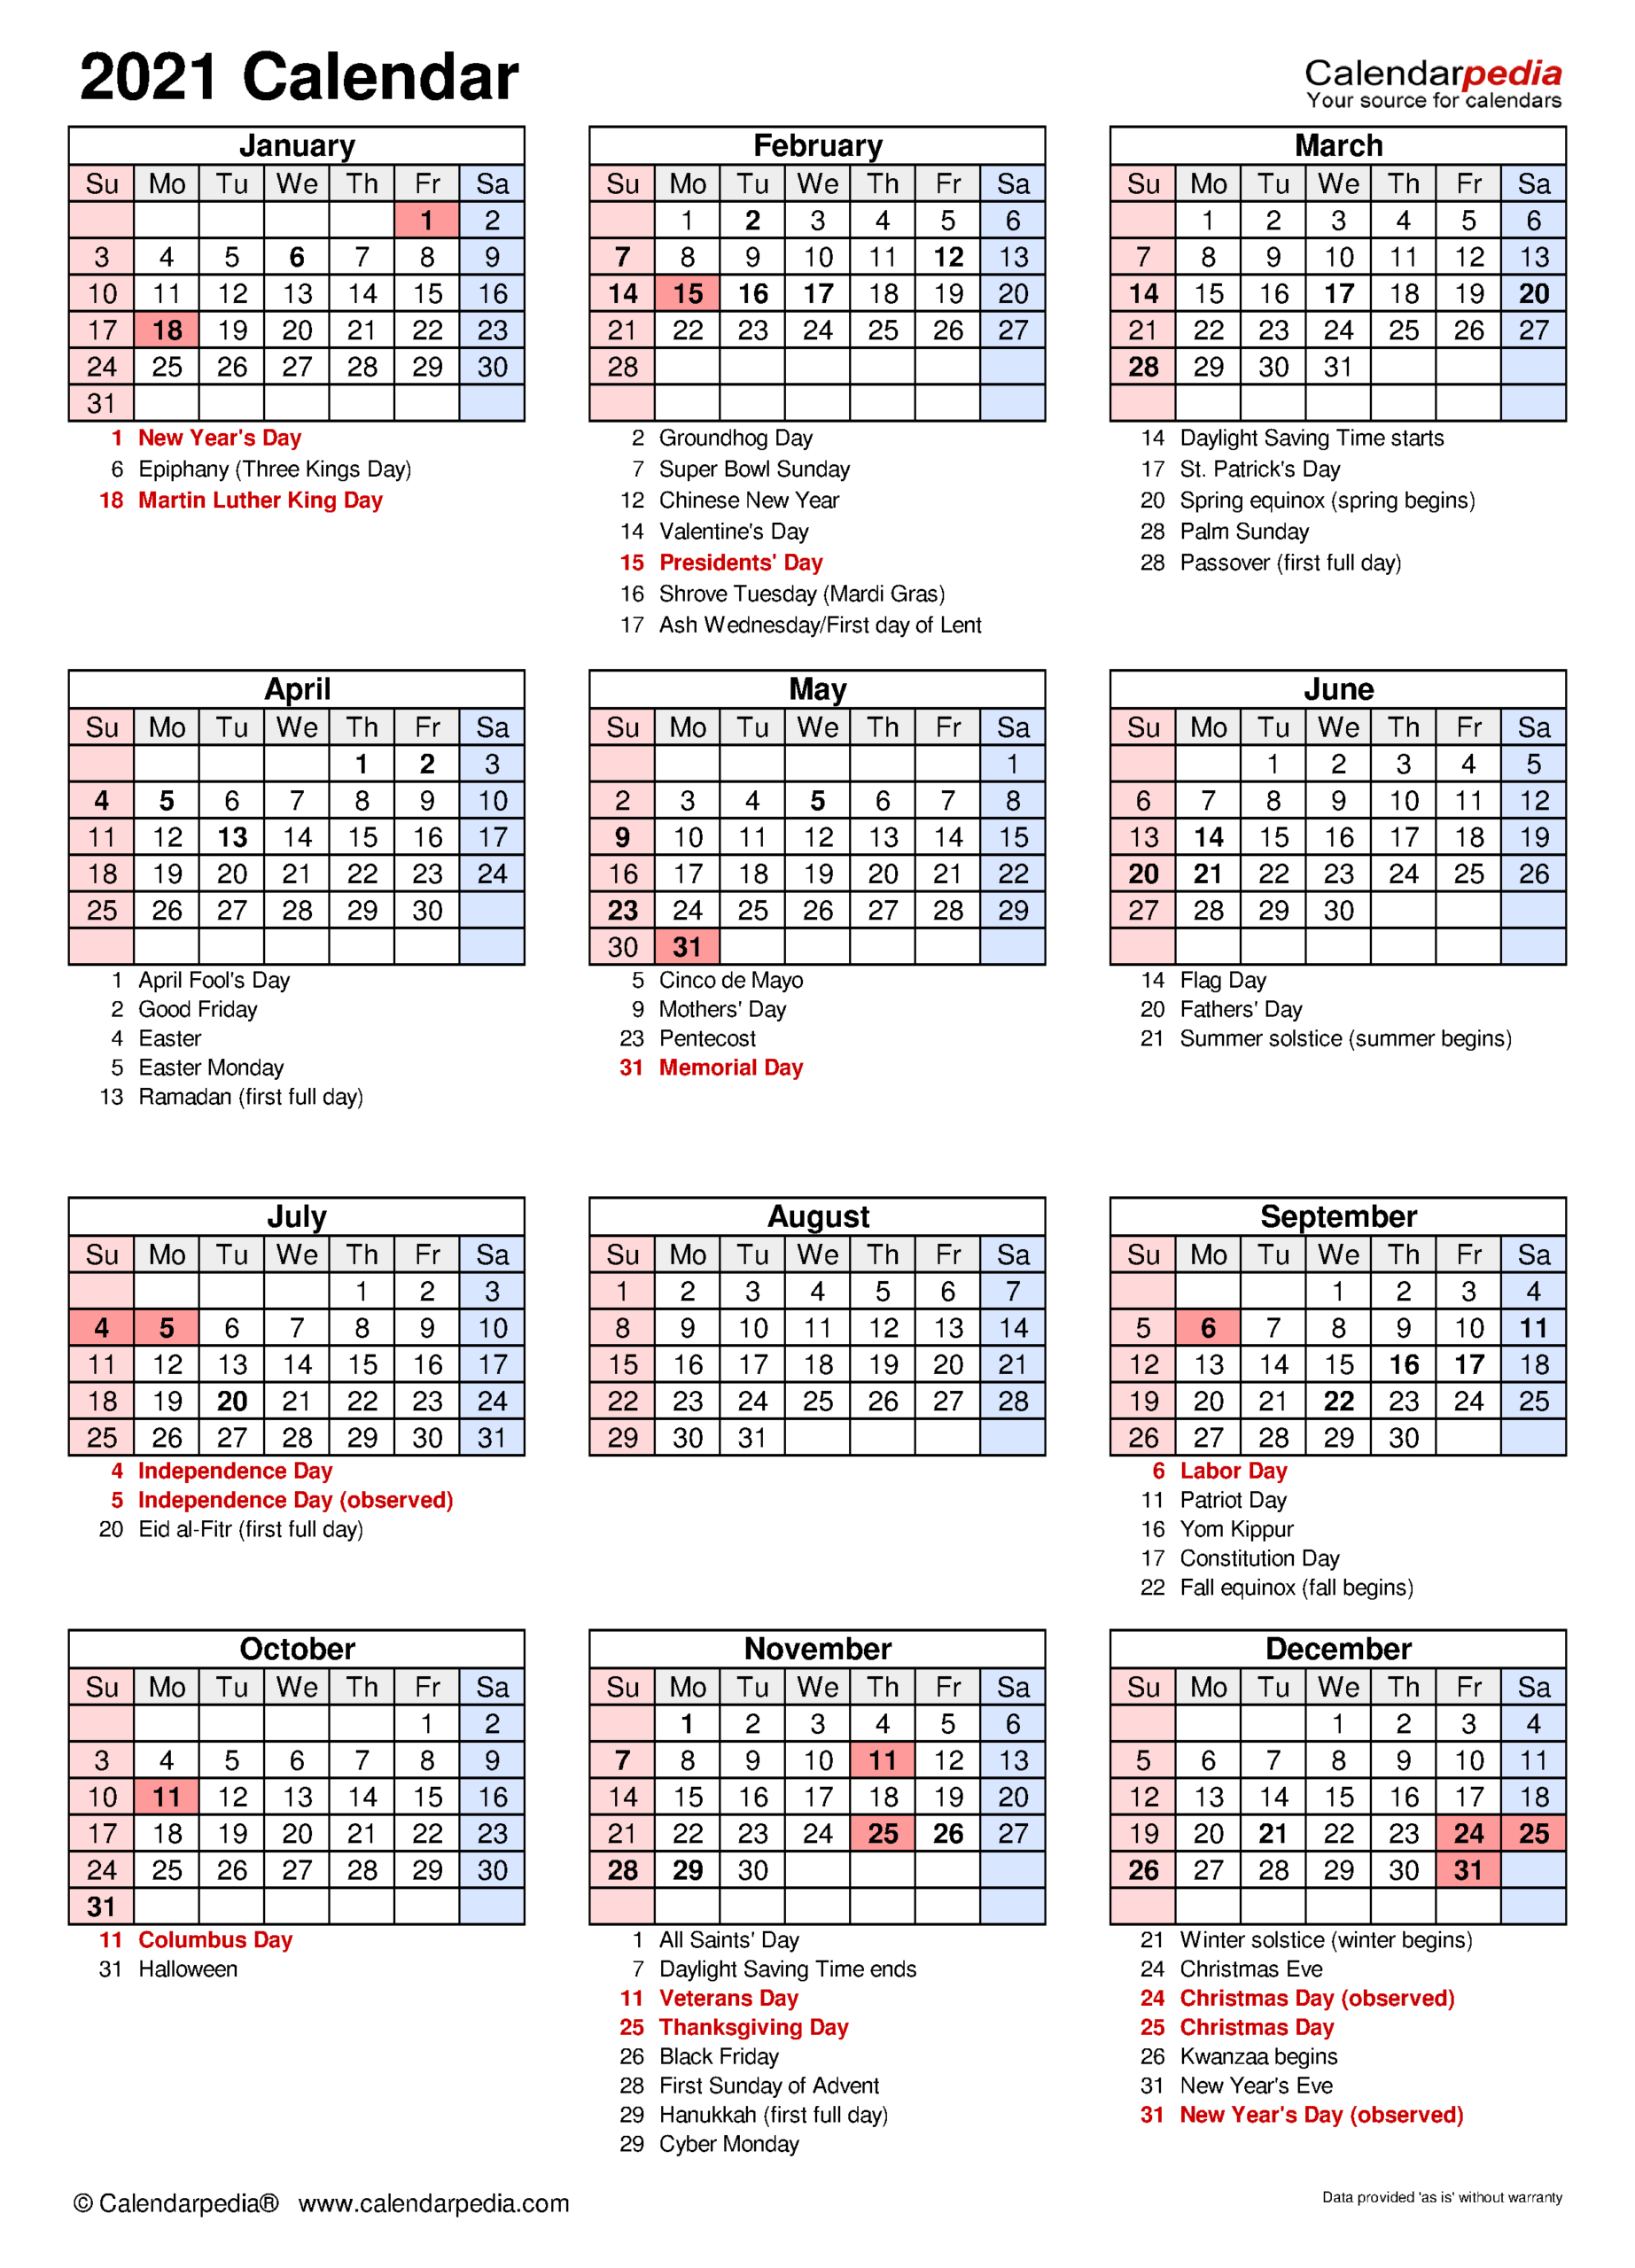 Shift Calendar 2021 Free | Calendar Printables Free Blank